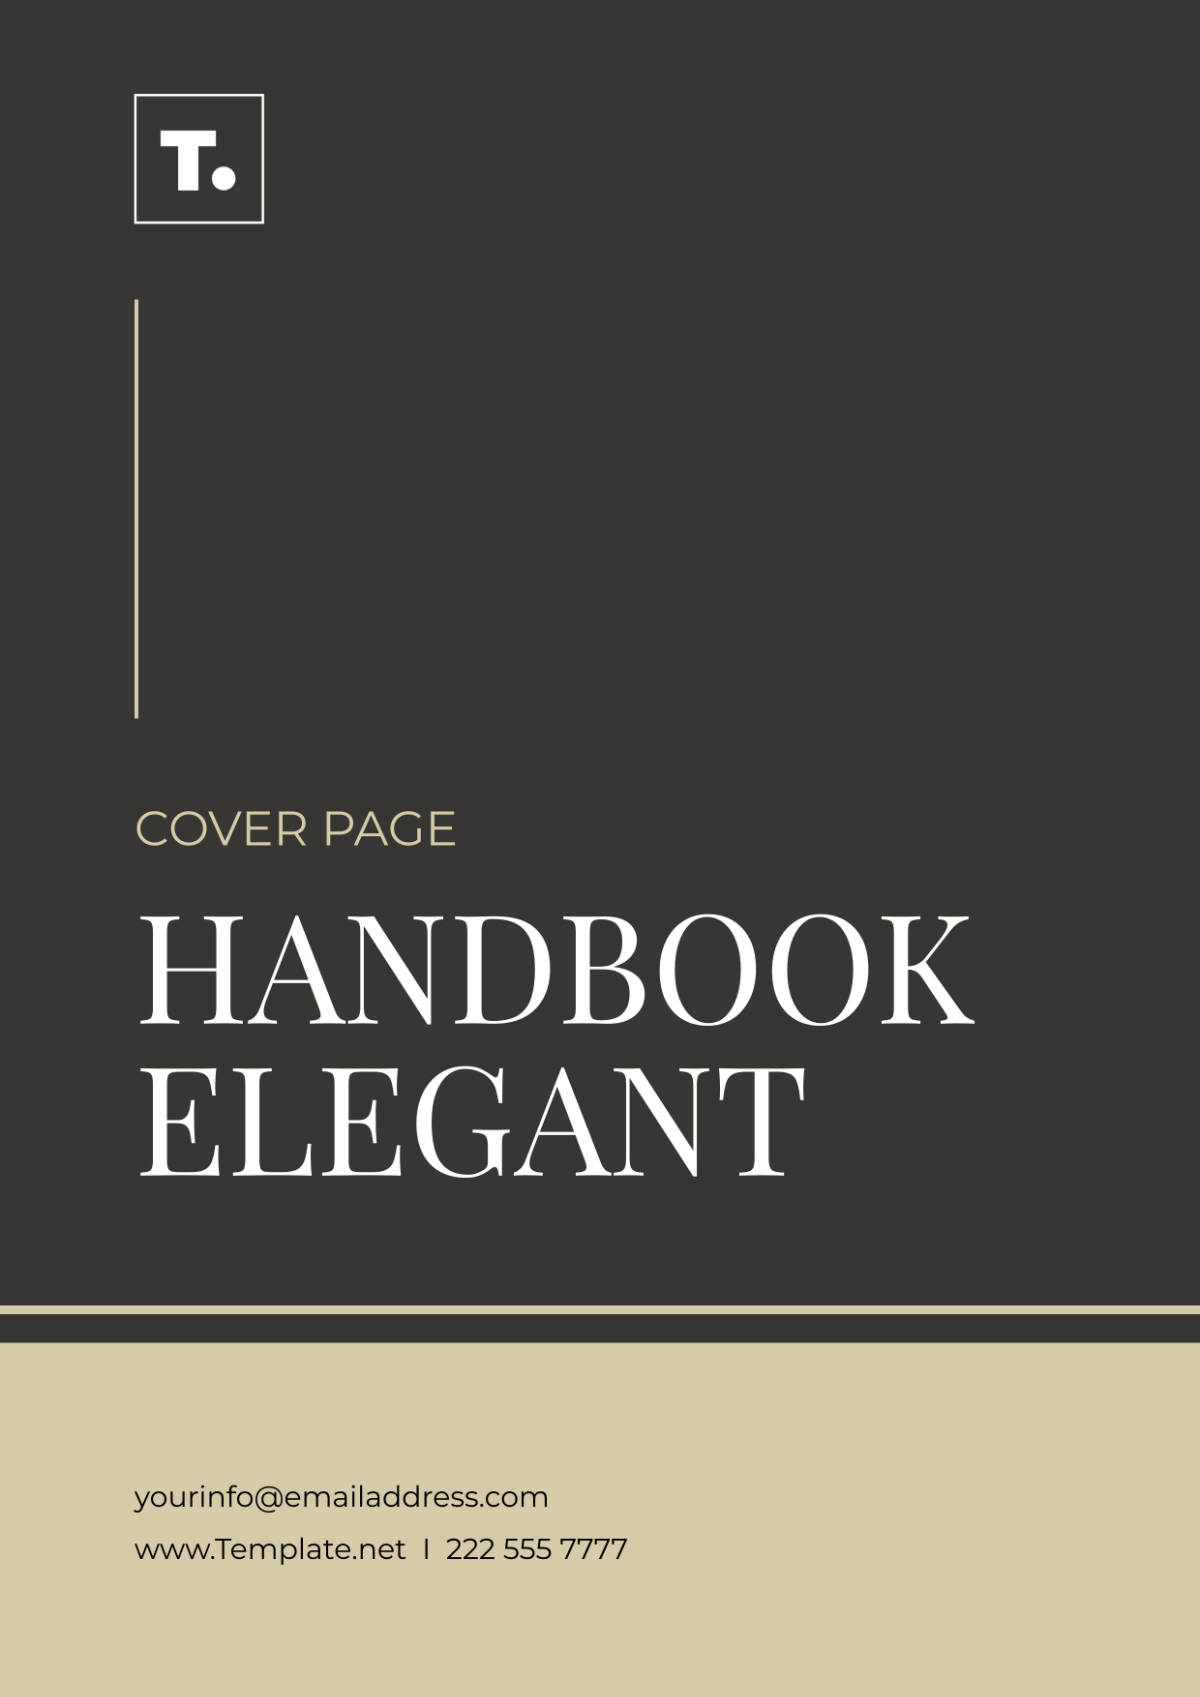 Handbook Elegant Cover Page